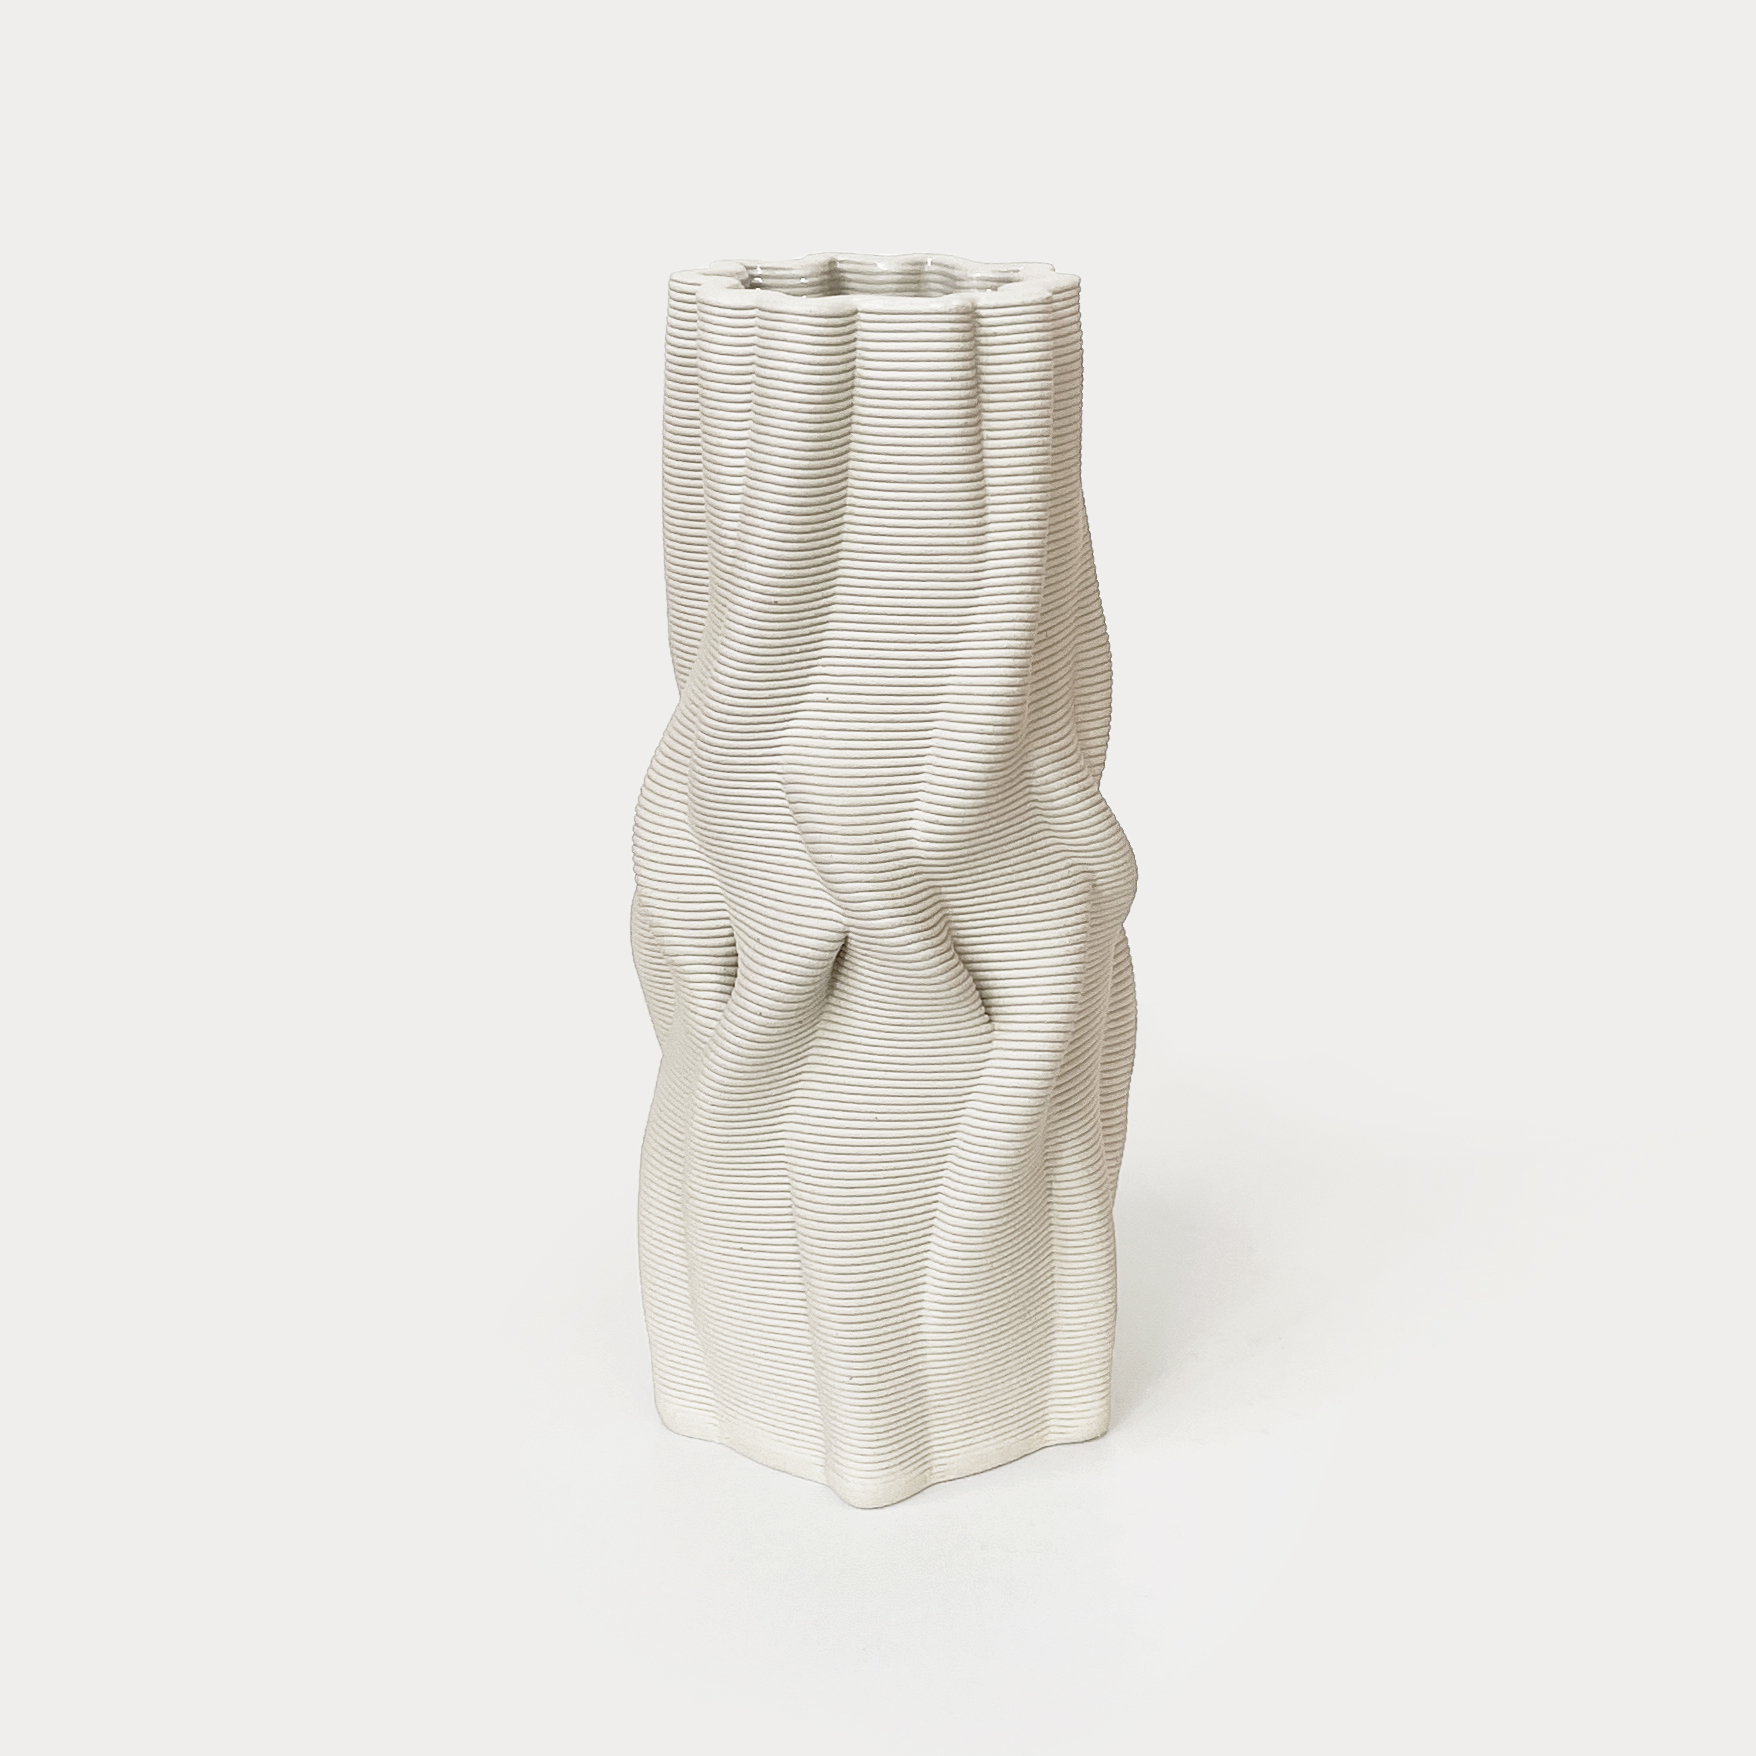 Intertwined Vase Cream 3